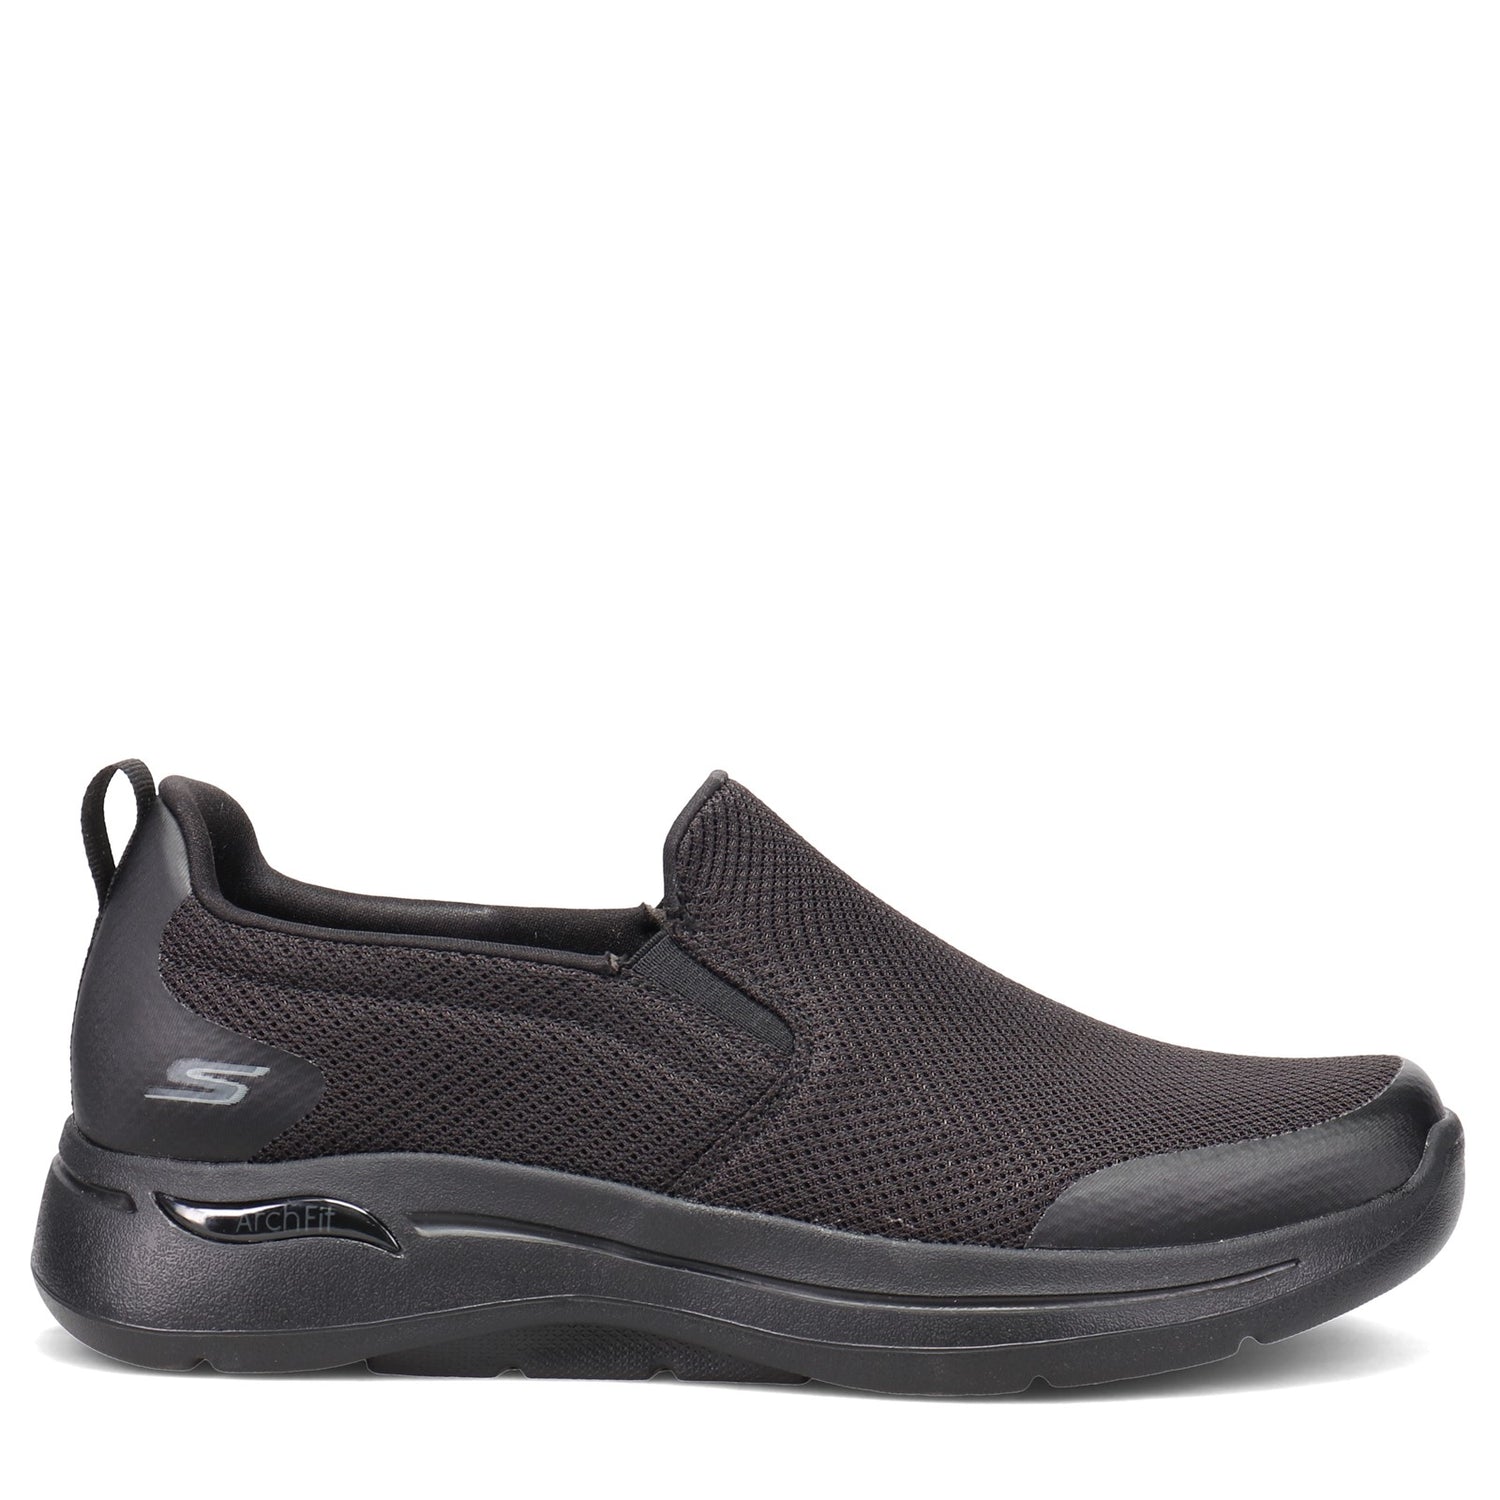 Peltz Shoes  Men's Skechers GOwalk Arch Fit - Togpath Slip-On BLACK 216121WW-BBK